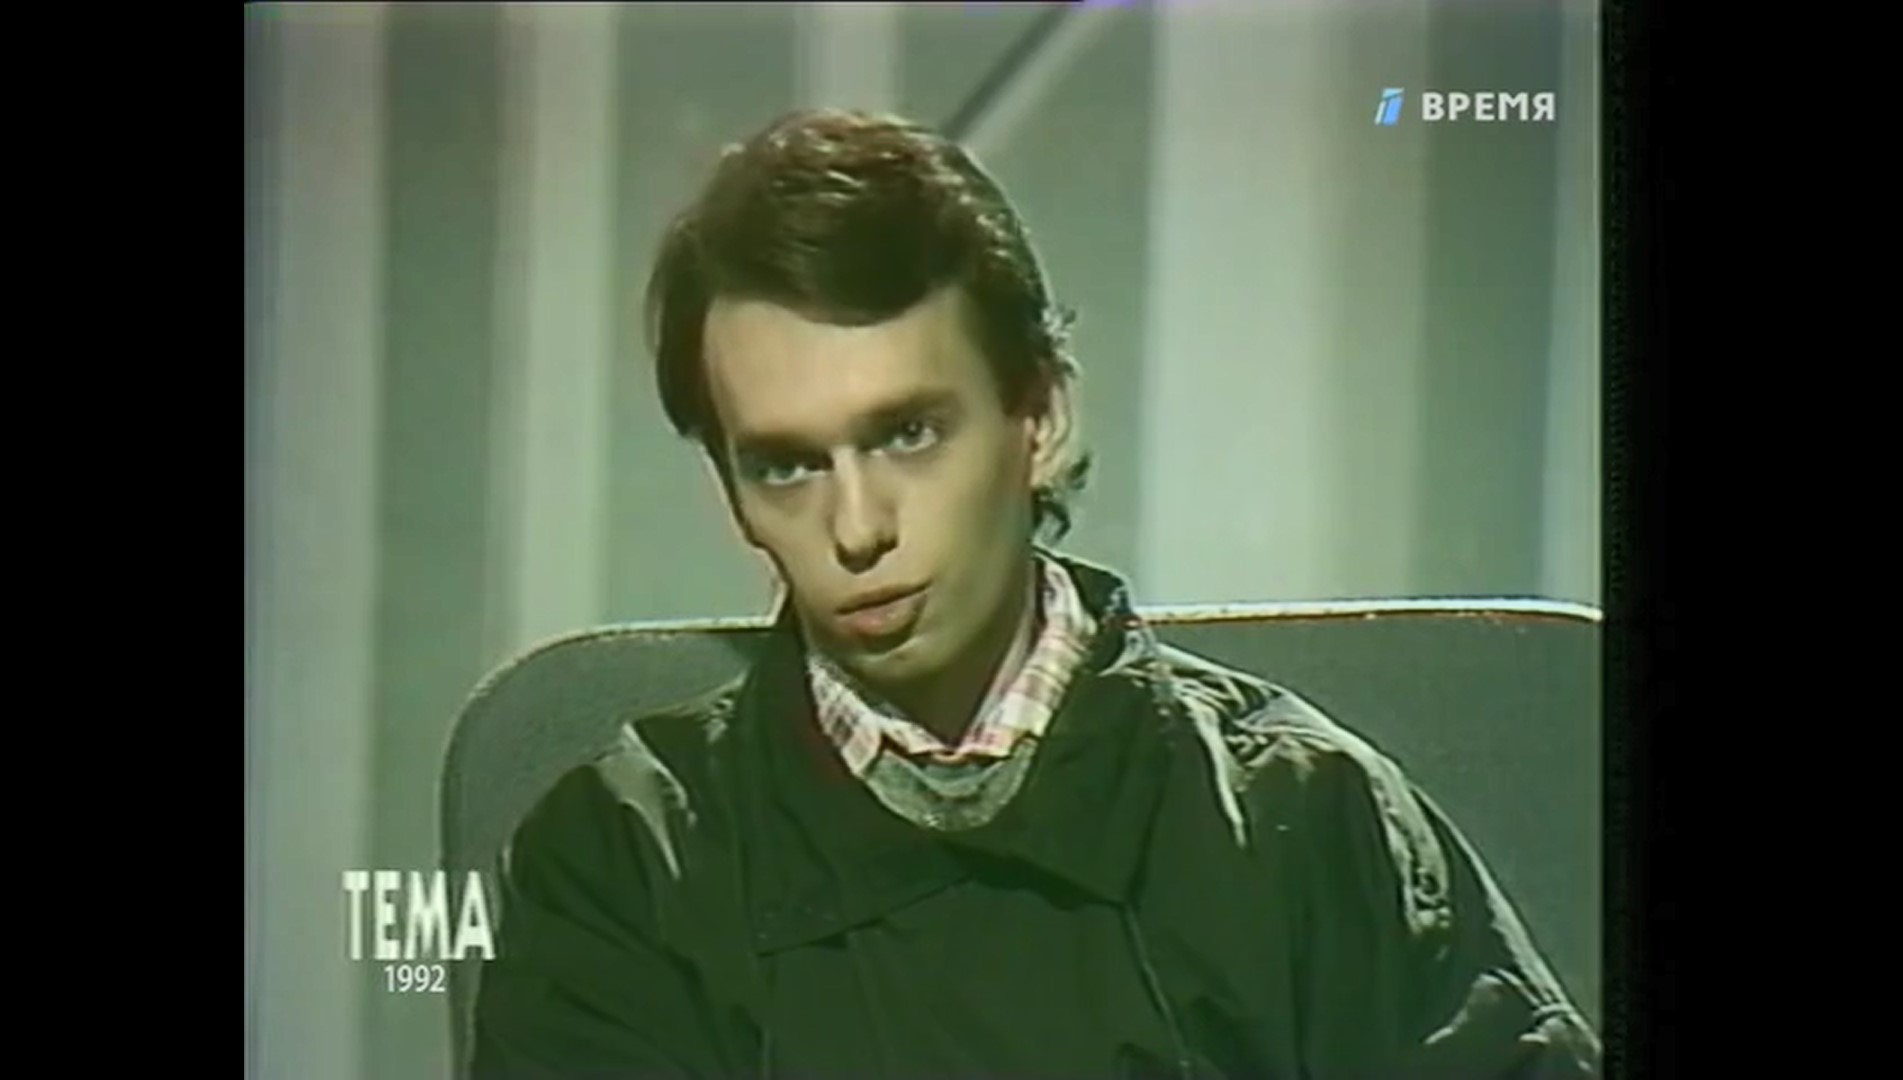 Геннадий Рощупкин, ВИЧ-активист, выпуск передачи 